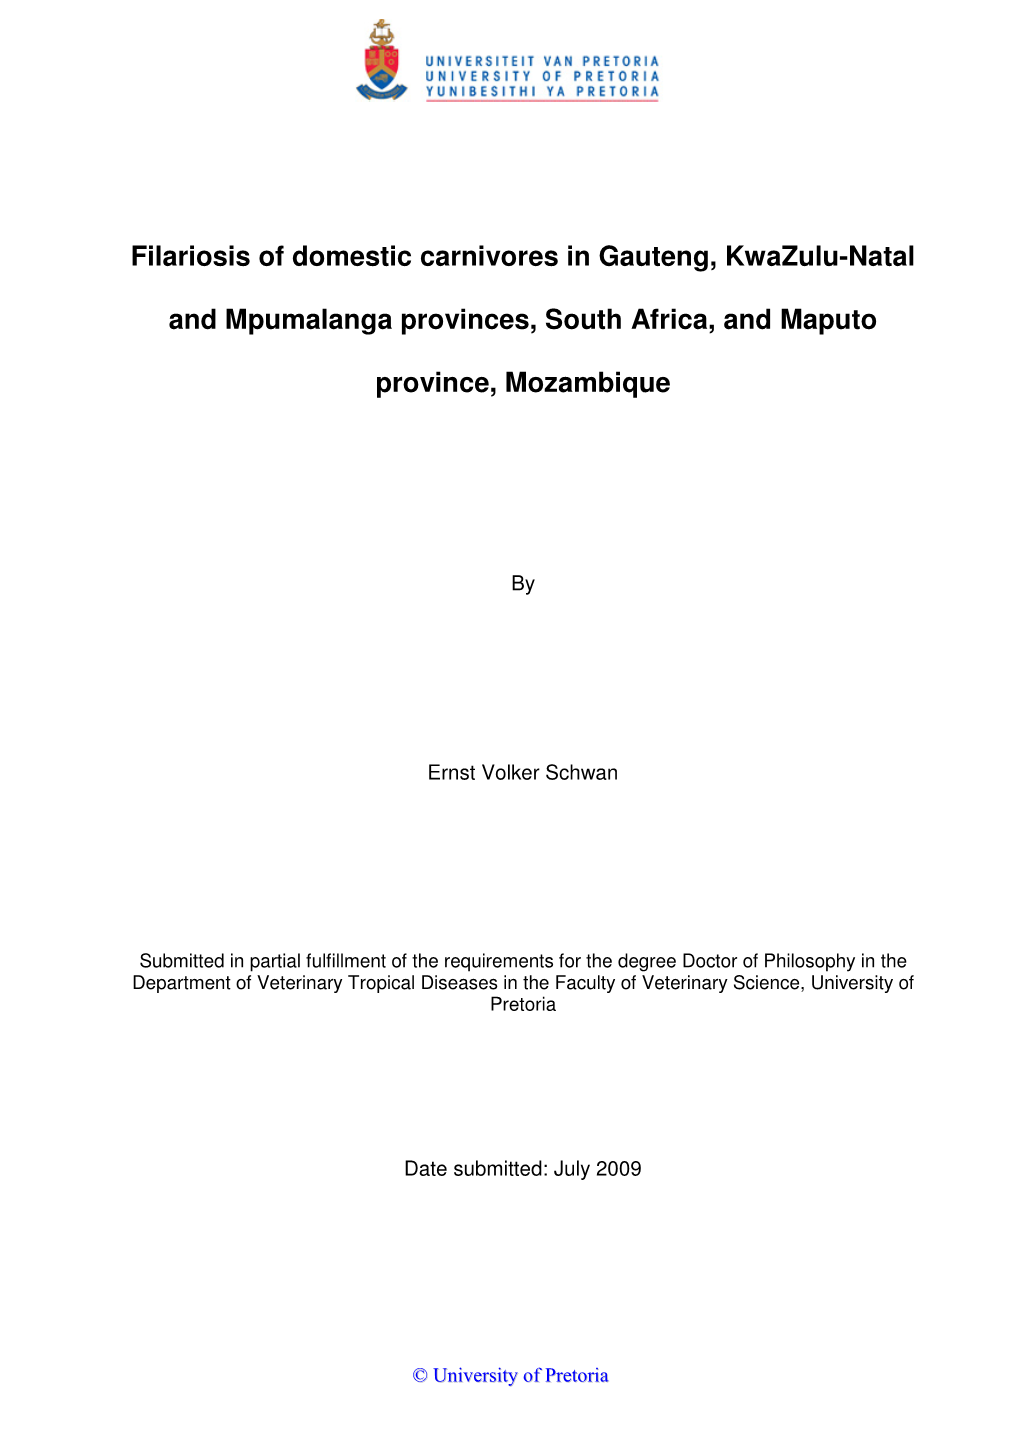 Filariosis of Domestic Carnivores in Gauteng, Kwazulu-Natal And